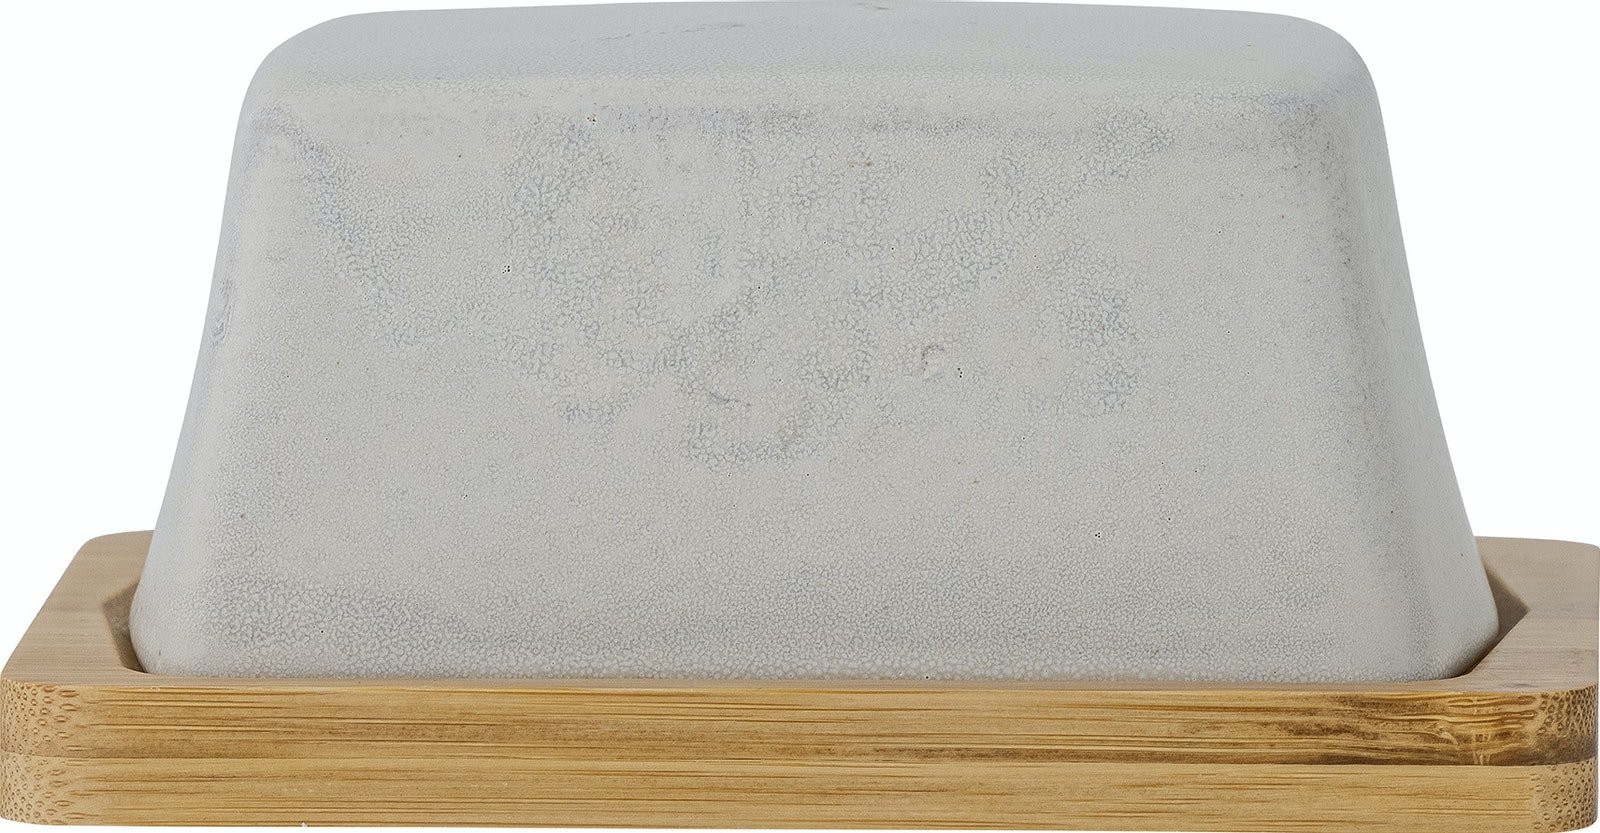 #3 - Josefine, Smørboks, Stentøj by Bloomingville (H: 7,5 cm. x B: 12 cm. x L: 16 cm., Grå)